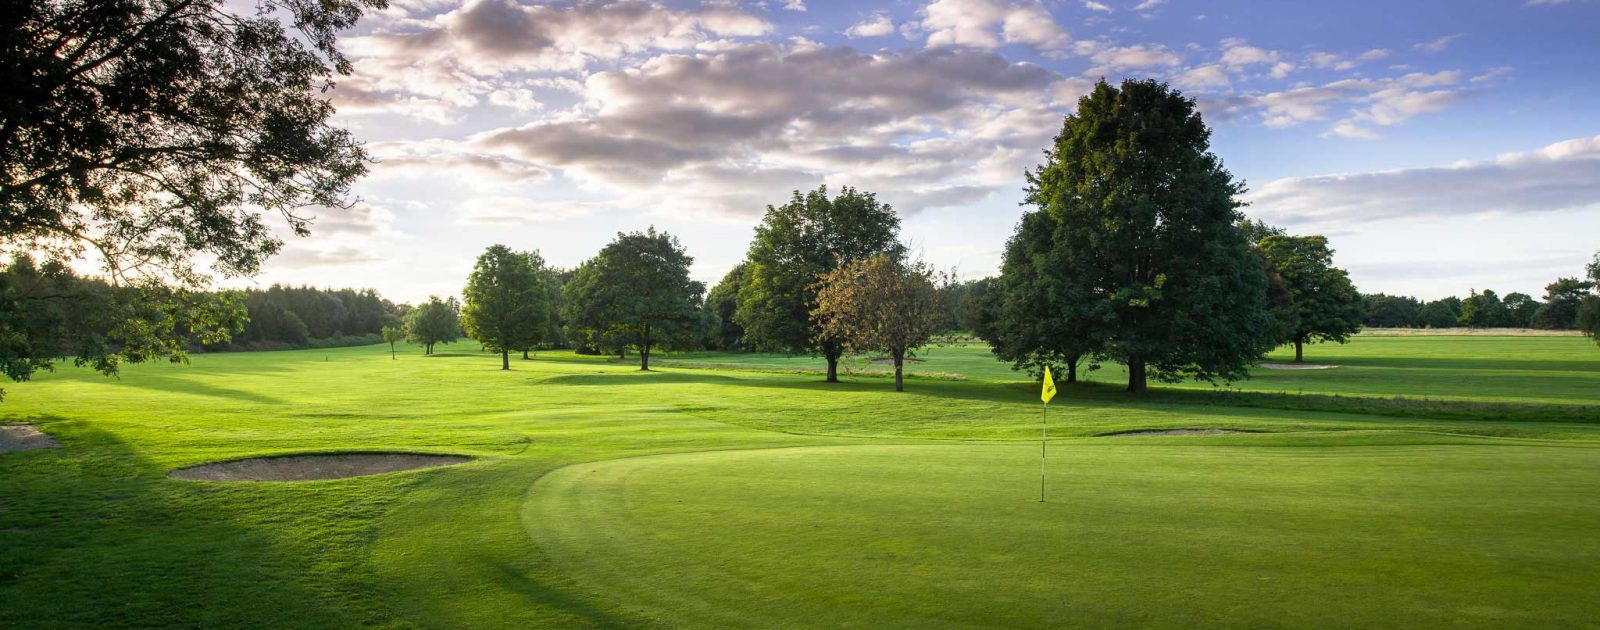 Redbourn Golf Club green at evening